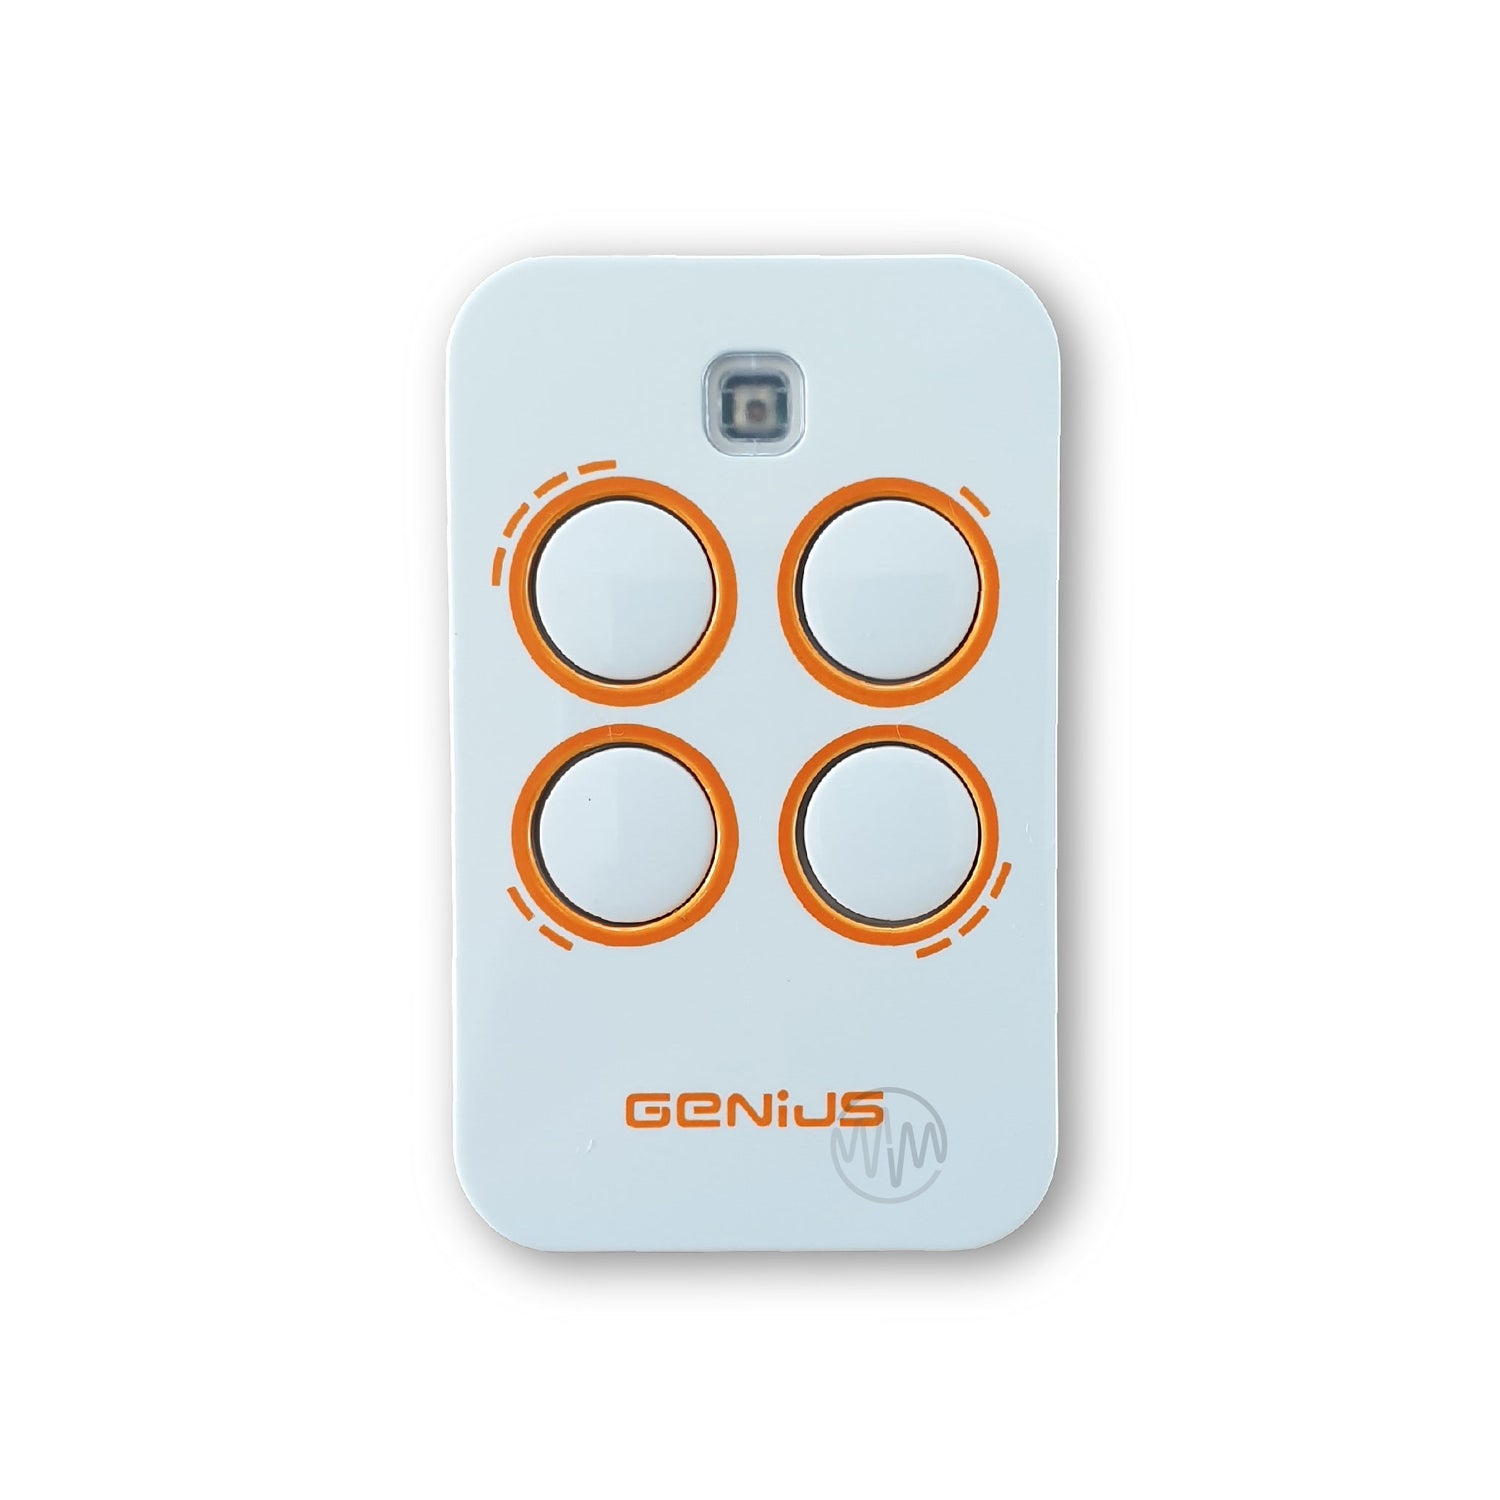 Genius Garage & Gate Remotes